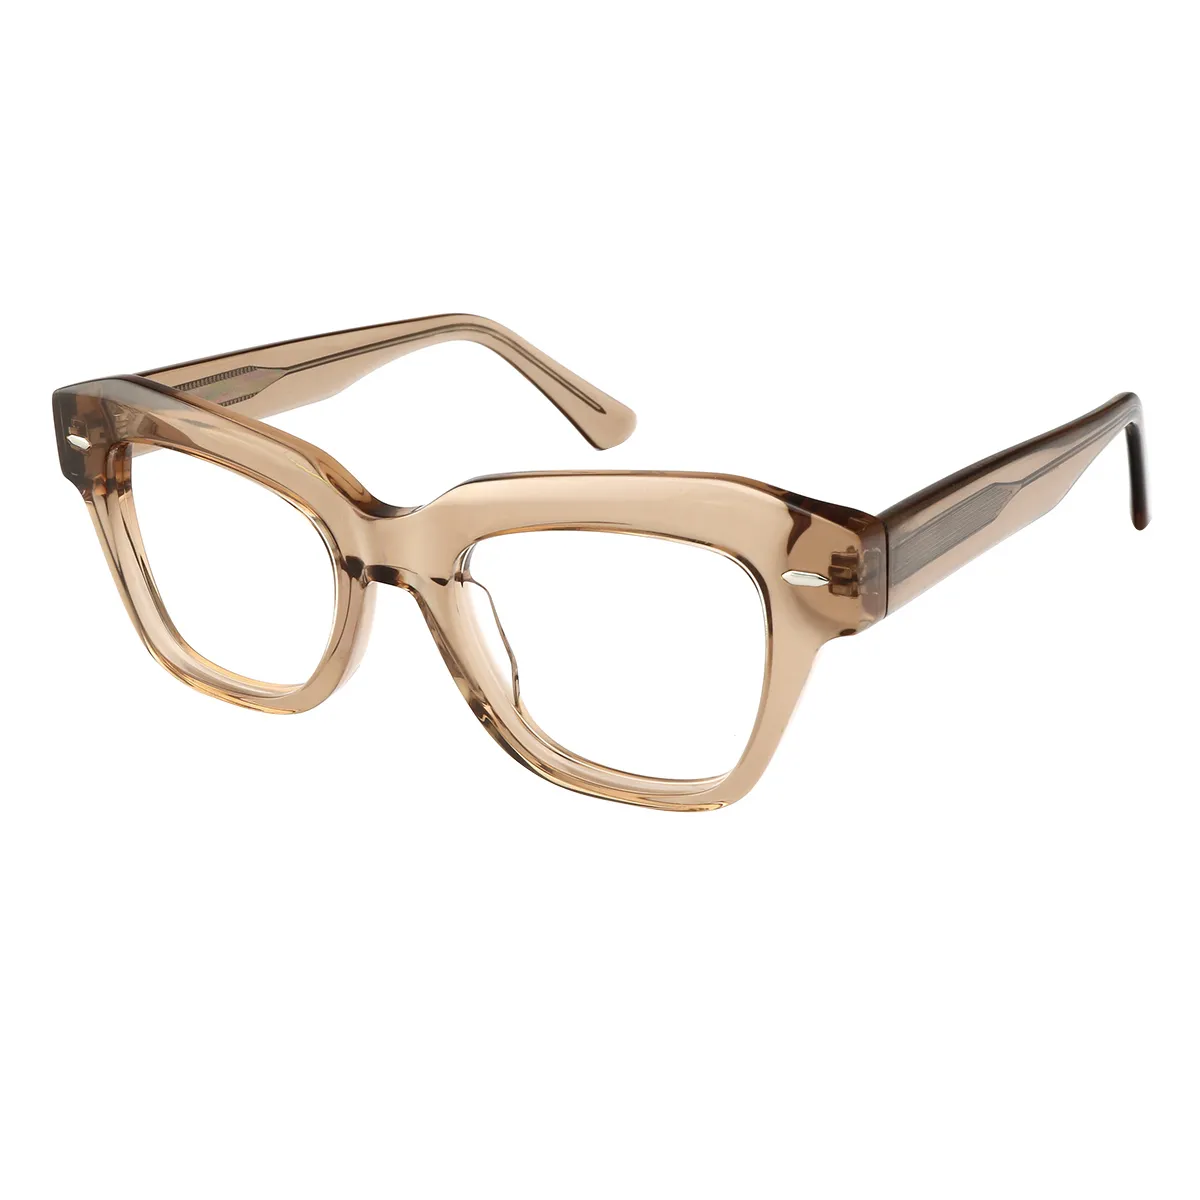 Myrtle - Square Transparent Brown Glasses for Men & Women